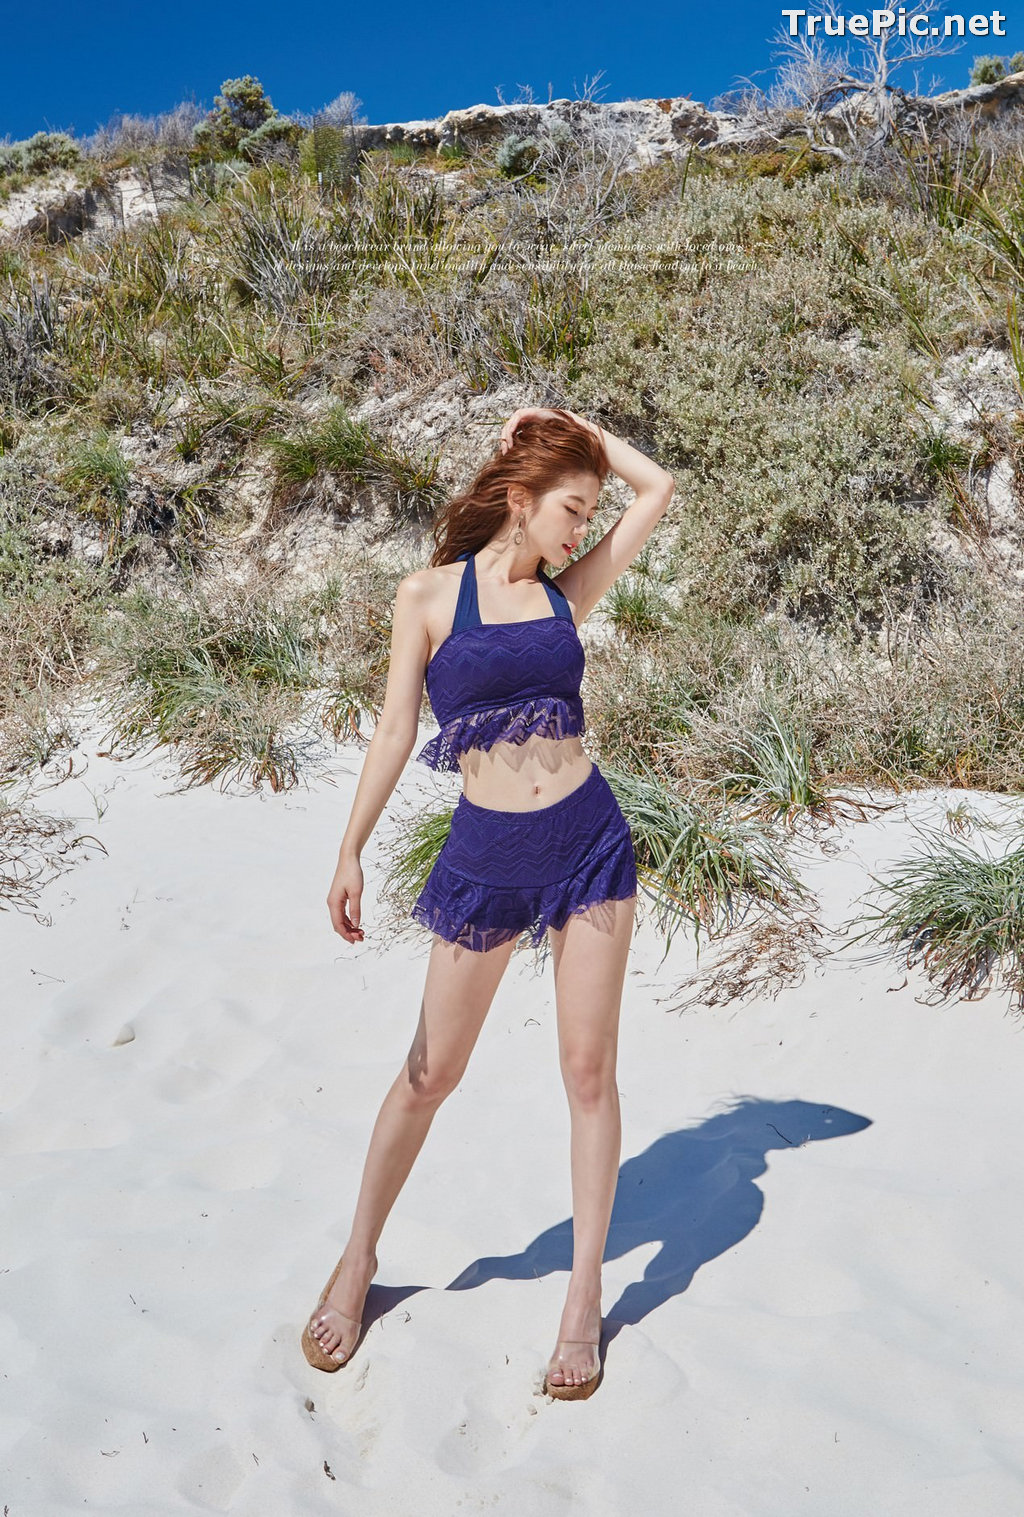 Image Lee Chae Eun - Korean Fashion Model - Magic Fit Beachwear Set - TruePic.net - Picture-13